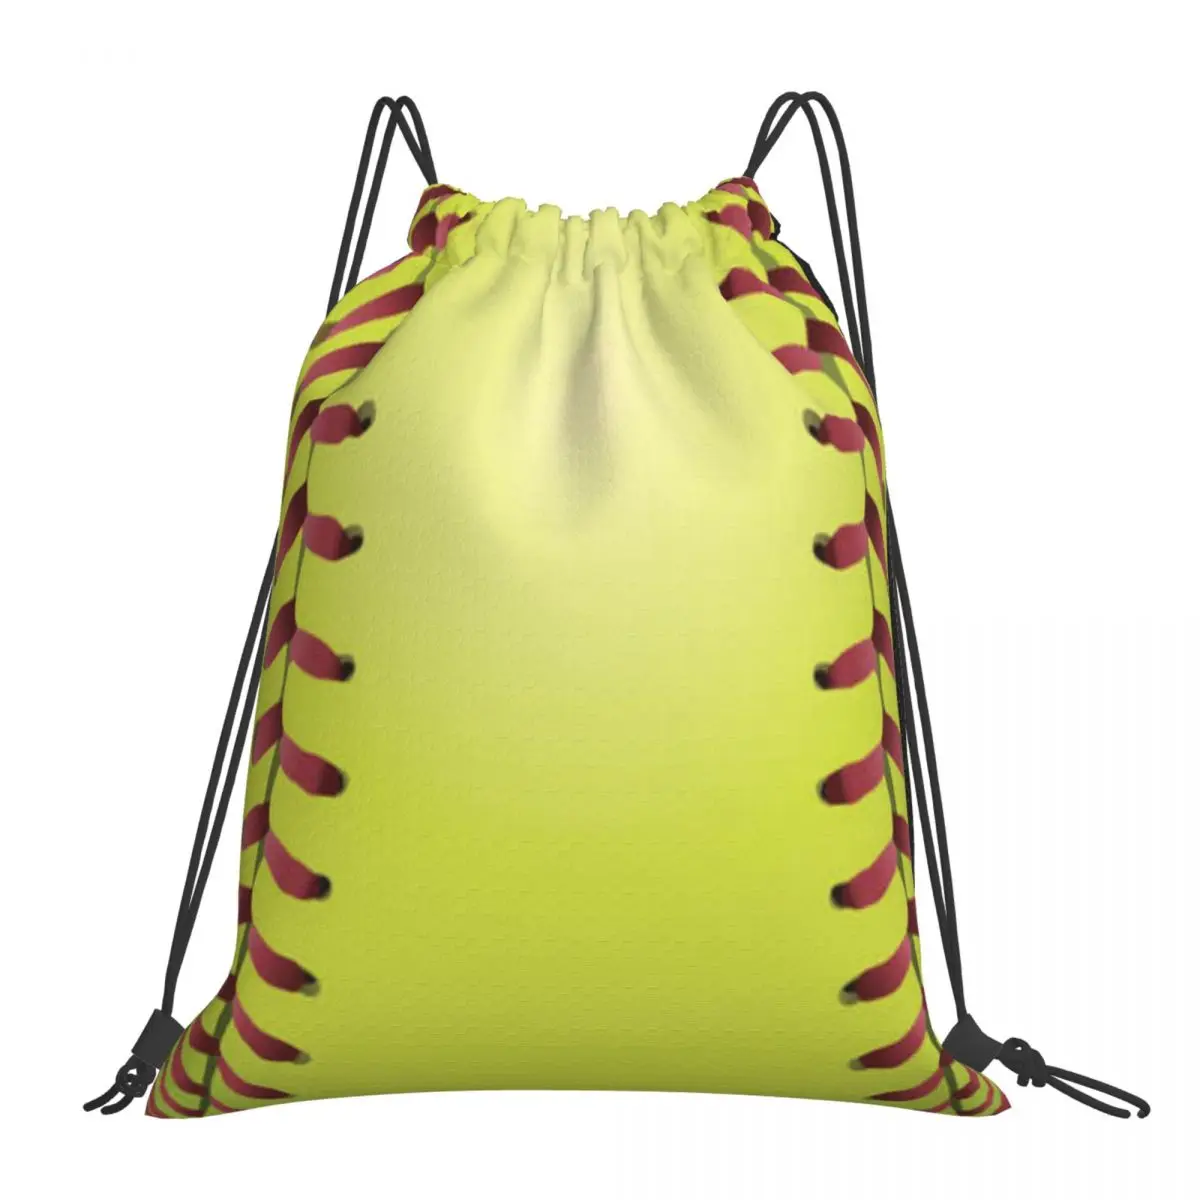 Foldable Gym Bag Softball Fitness Backpack Drawstring Hiking Camping Swimming Sports Bag